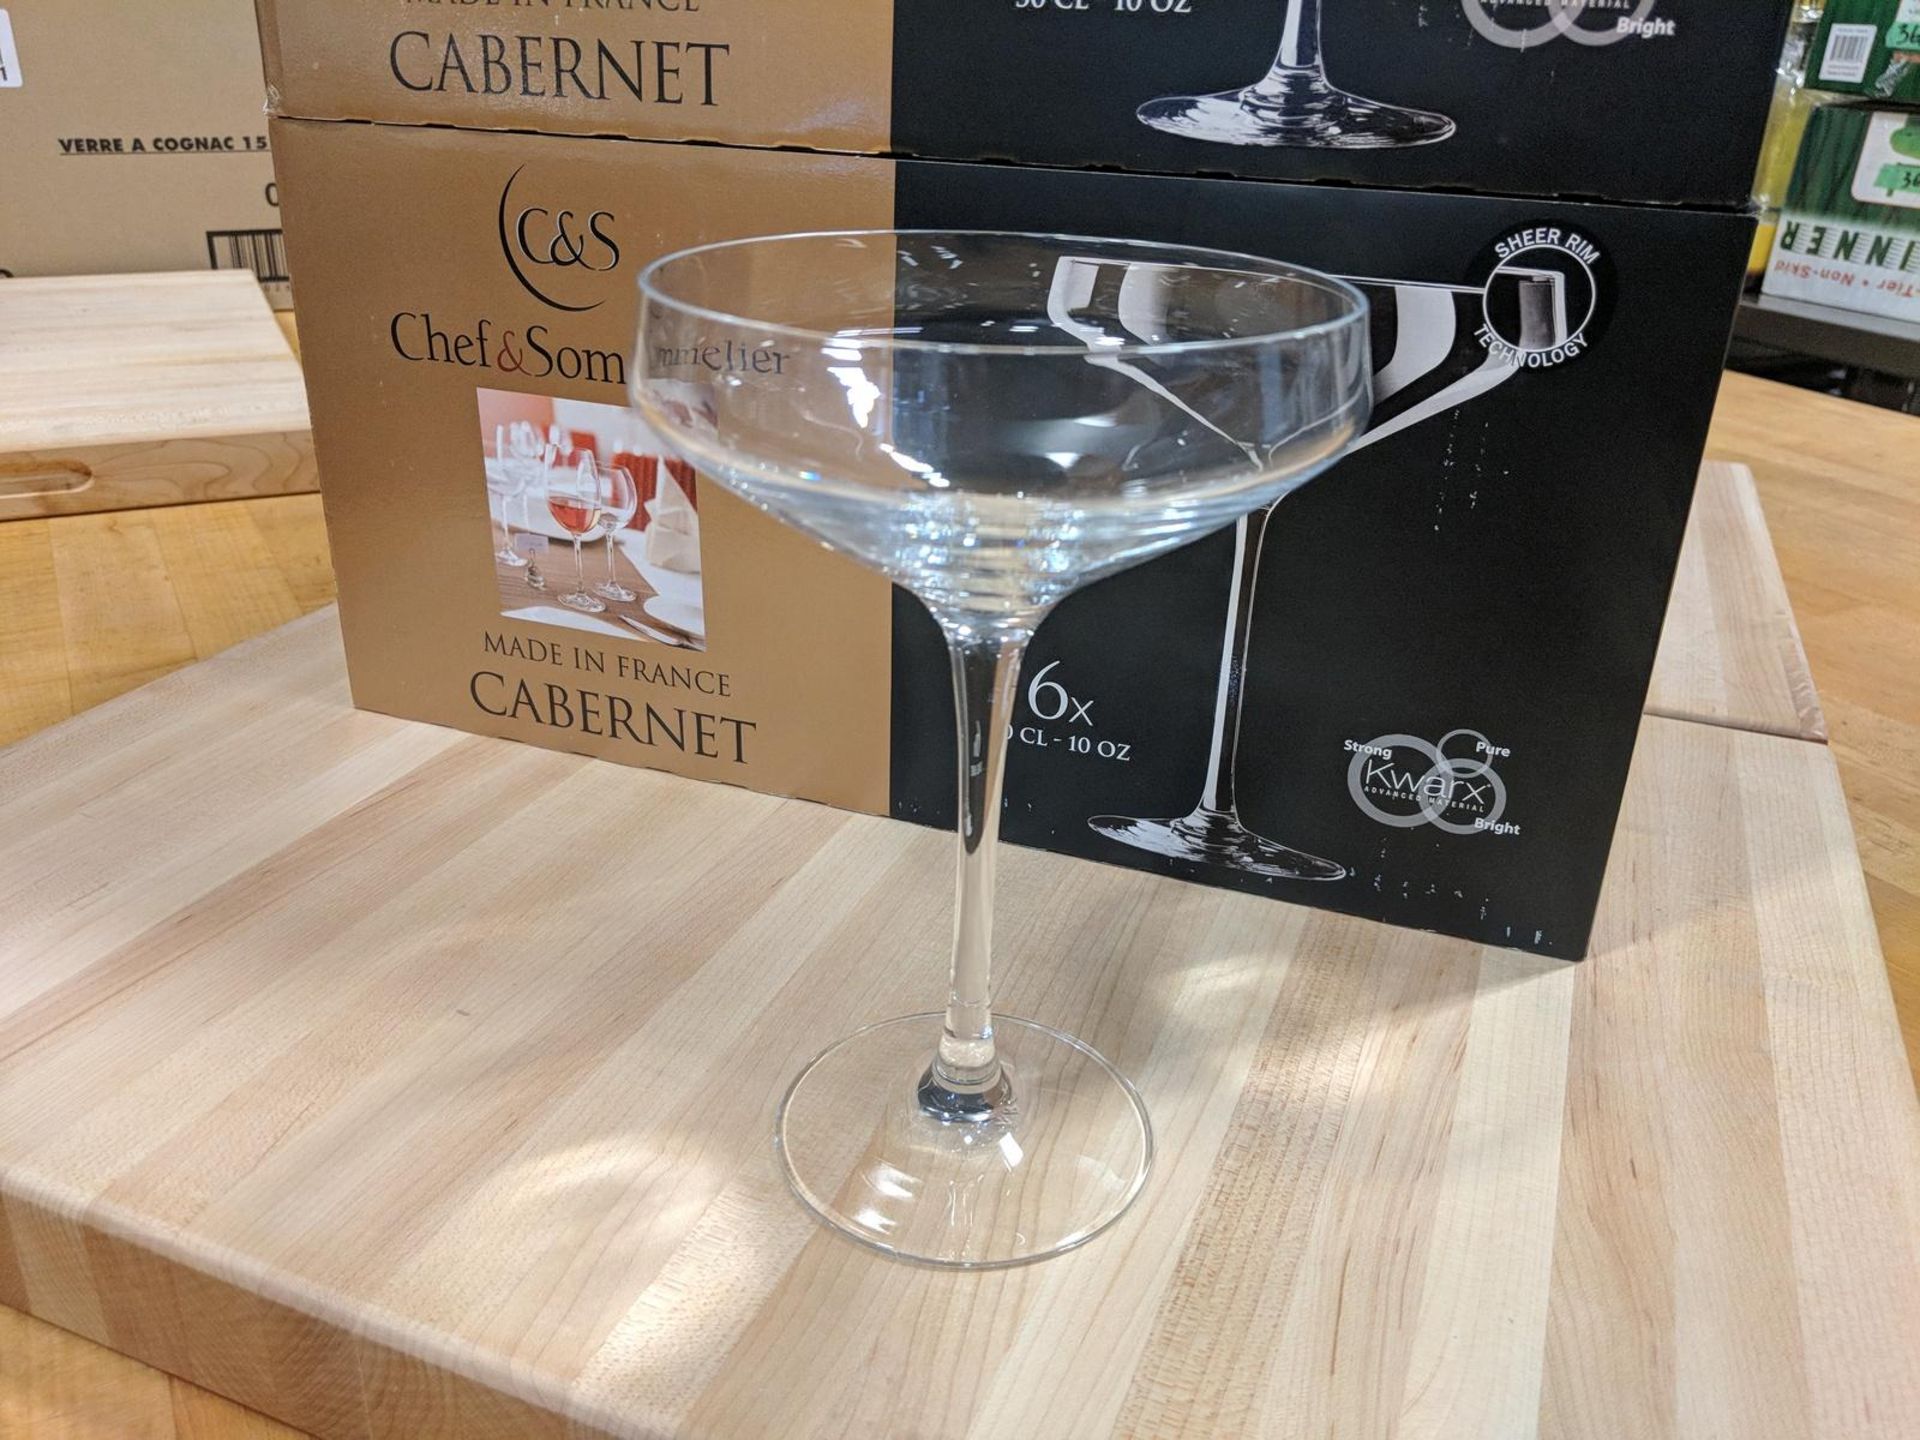 10oz/300ml Cabernet Champagne Coupe Glasses - Lot of 24 (1 Case/4 Boxes) C&S D6140 (N6815)